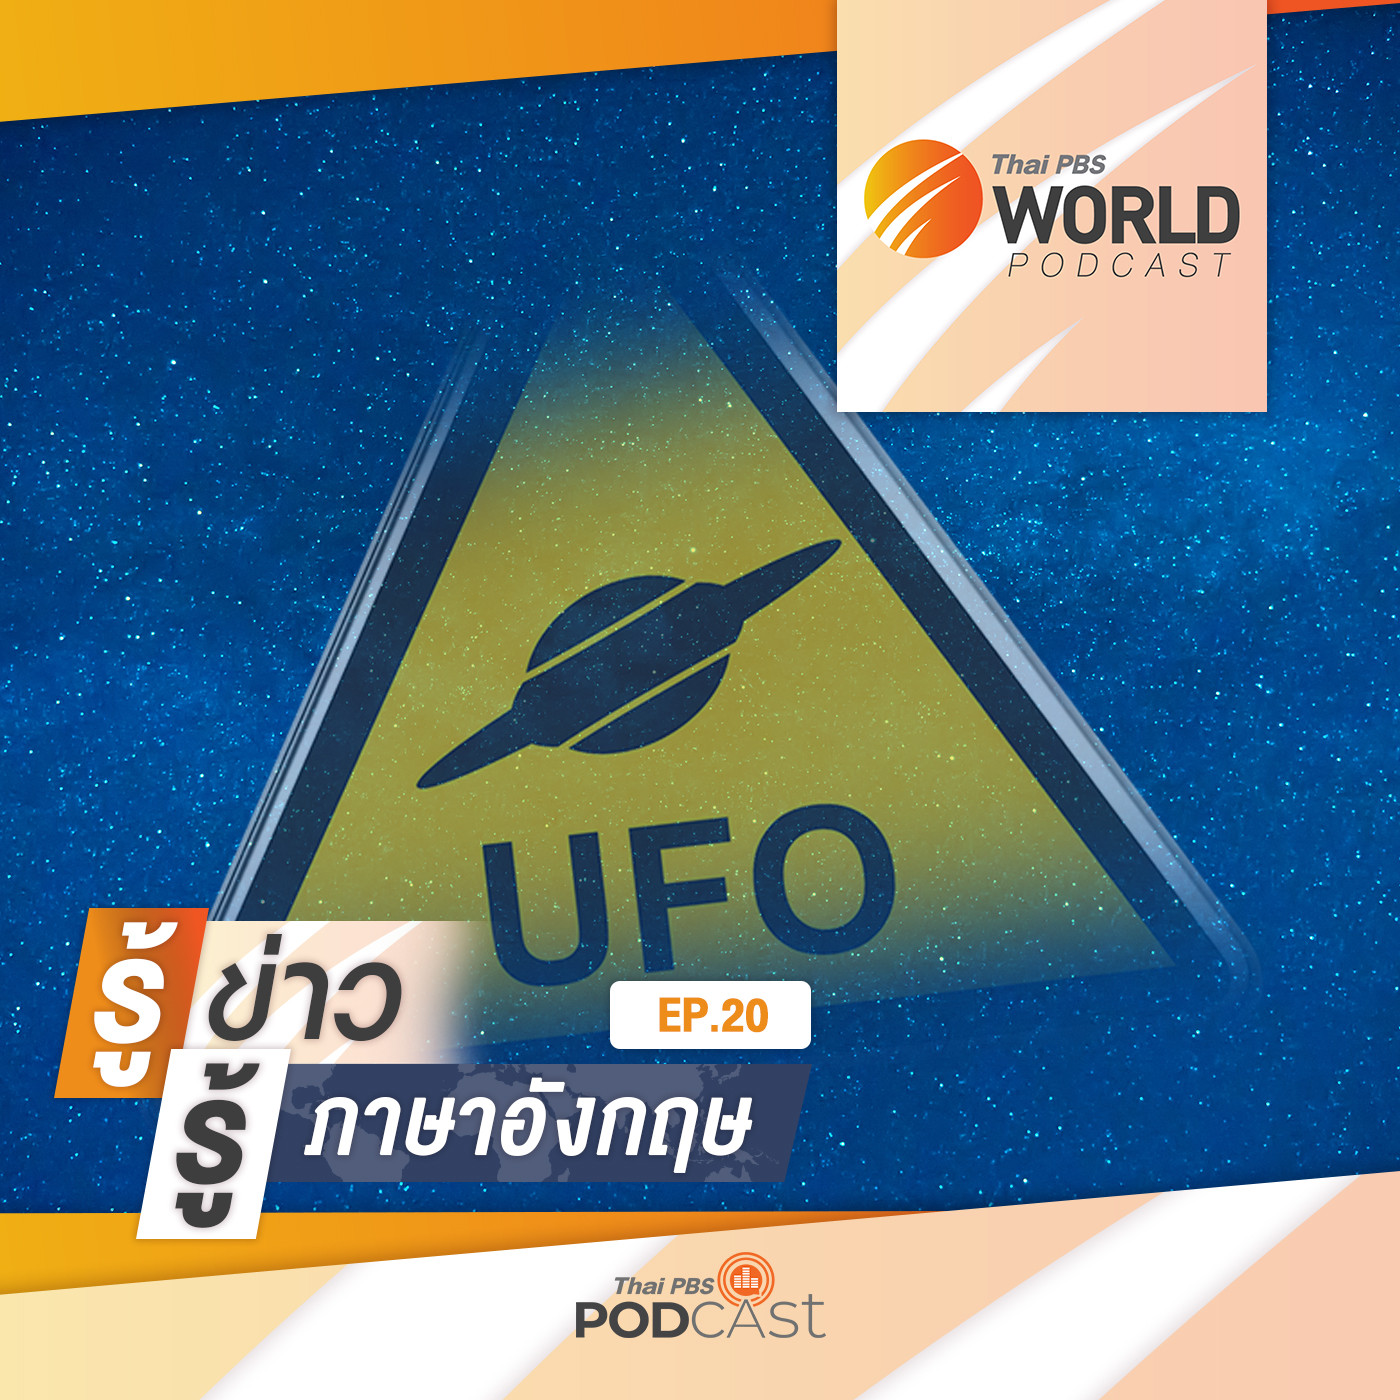 Thai PBS World Podcast - รู้ข่าว รู้ภาษาอังกฤษ EP. 20: รู้ข่าว รู้ภาษาอังกฤษ - ชาวนิวยอร์กหันมาเฝ้าดู “UFO” มากขึ้น ในช่วงโควิด-19 ระบาด